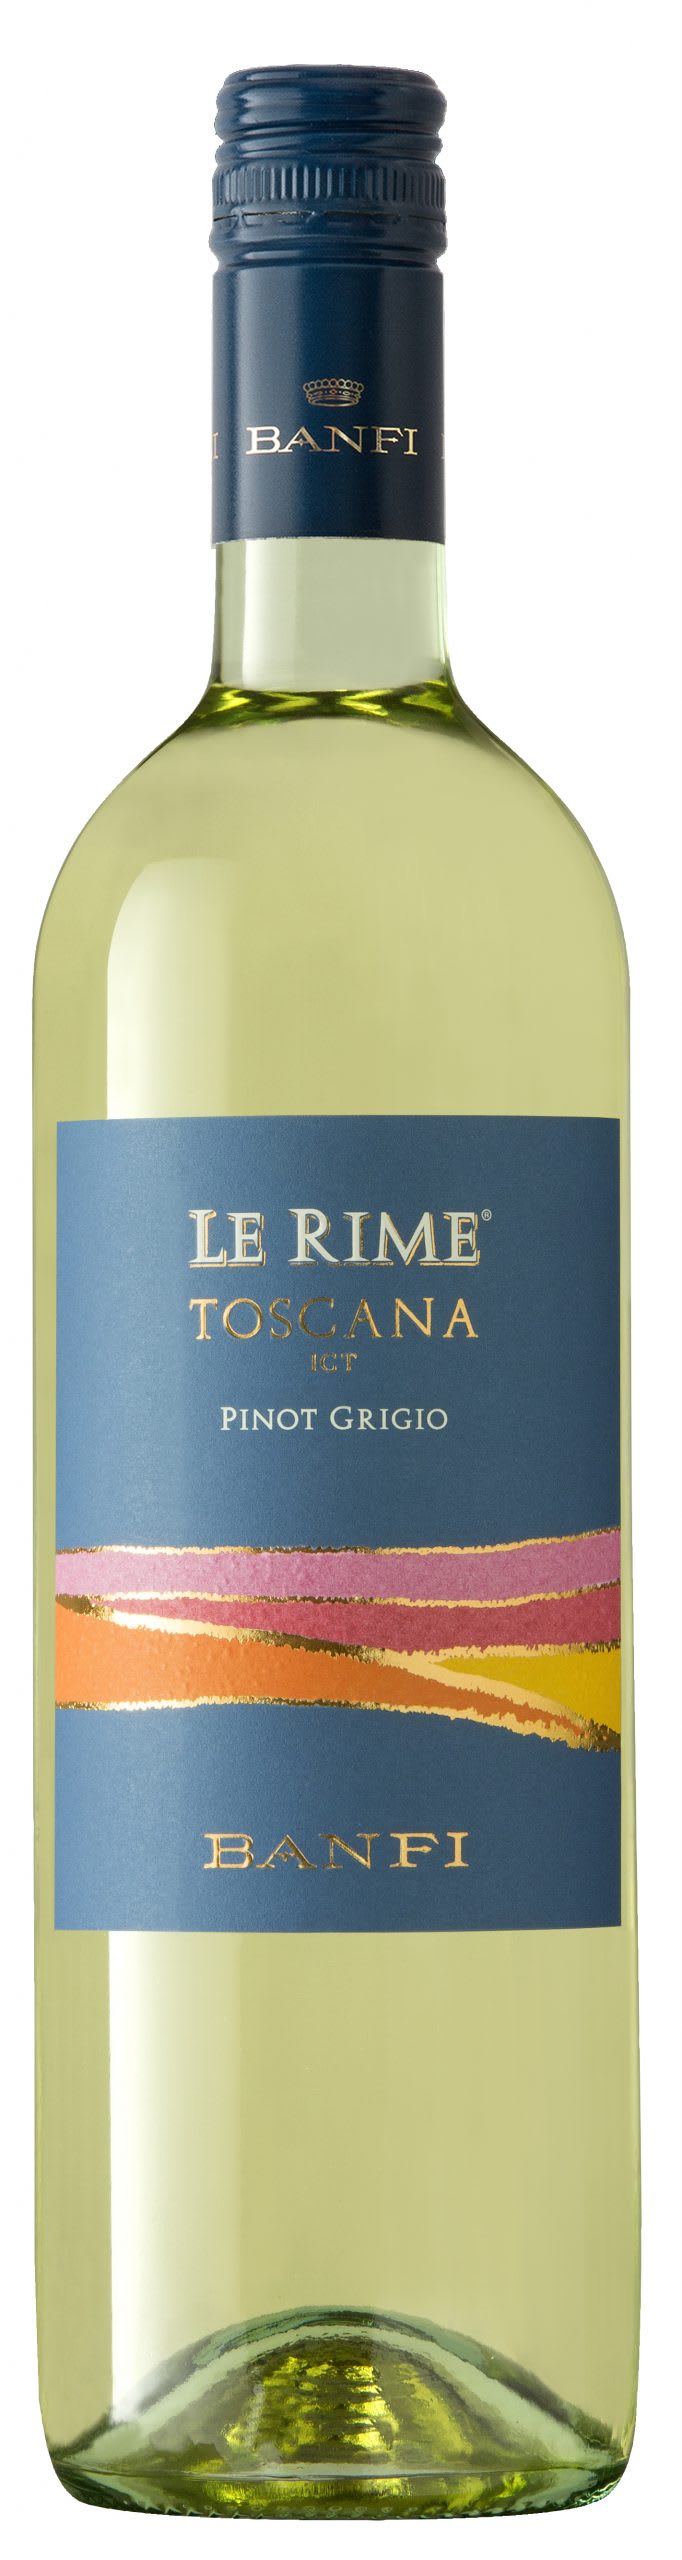 Banfi Le Rime Pinot Grigio